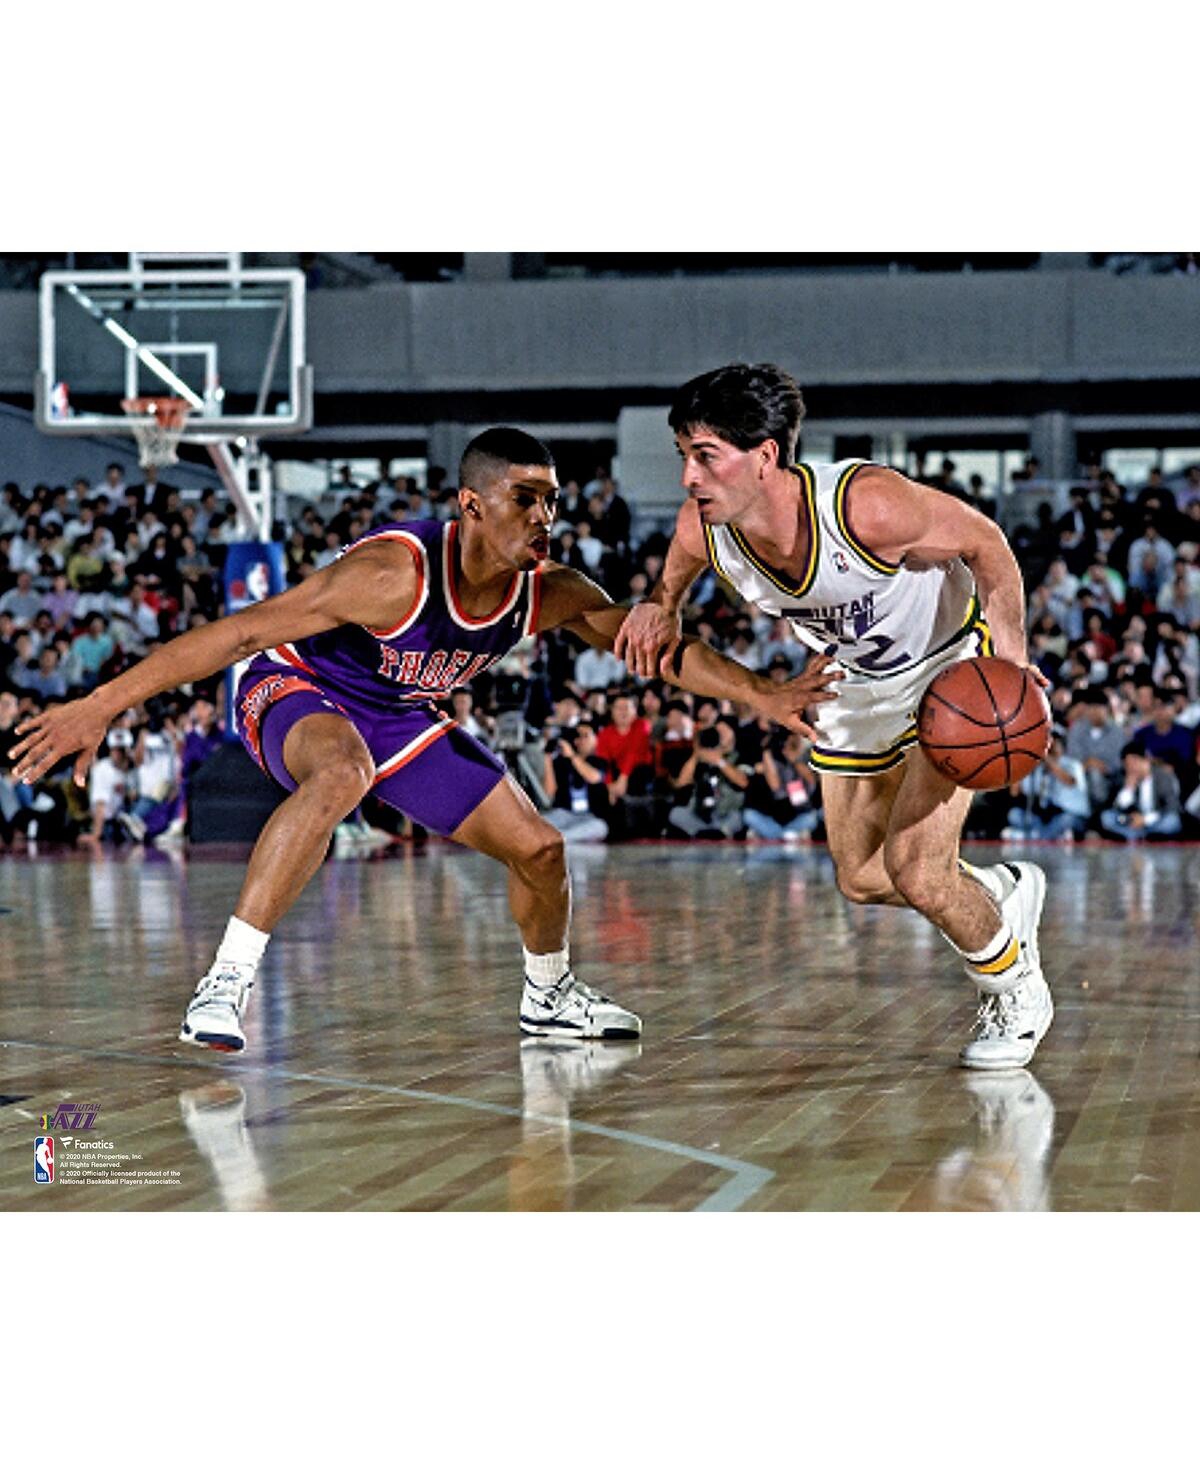 Fanatics Authentic John Stockton Utah Jazz Unsigned Dribbling Vs. Kevin Johnson Photograph In Multi